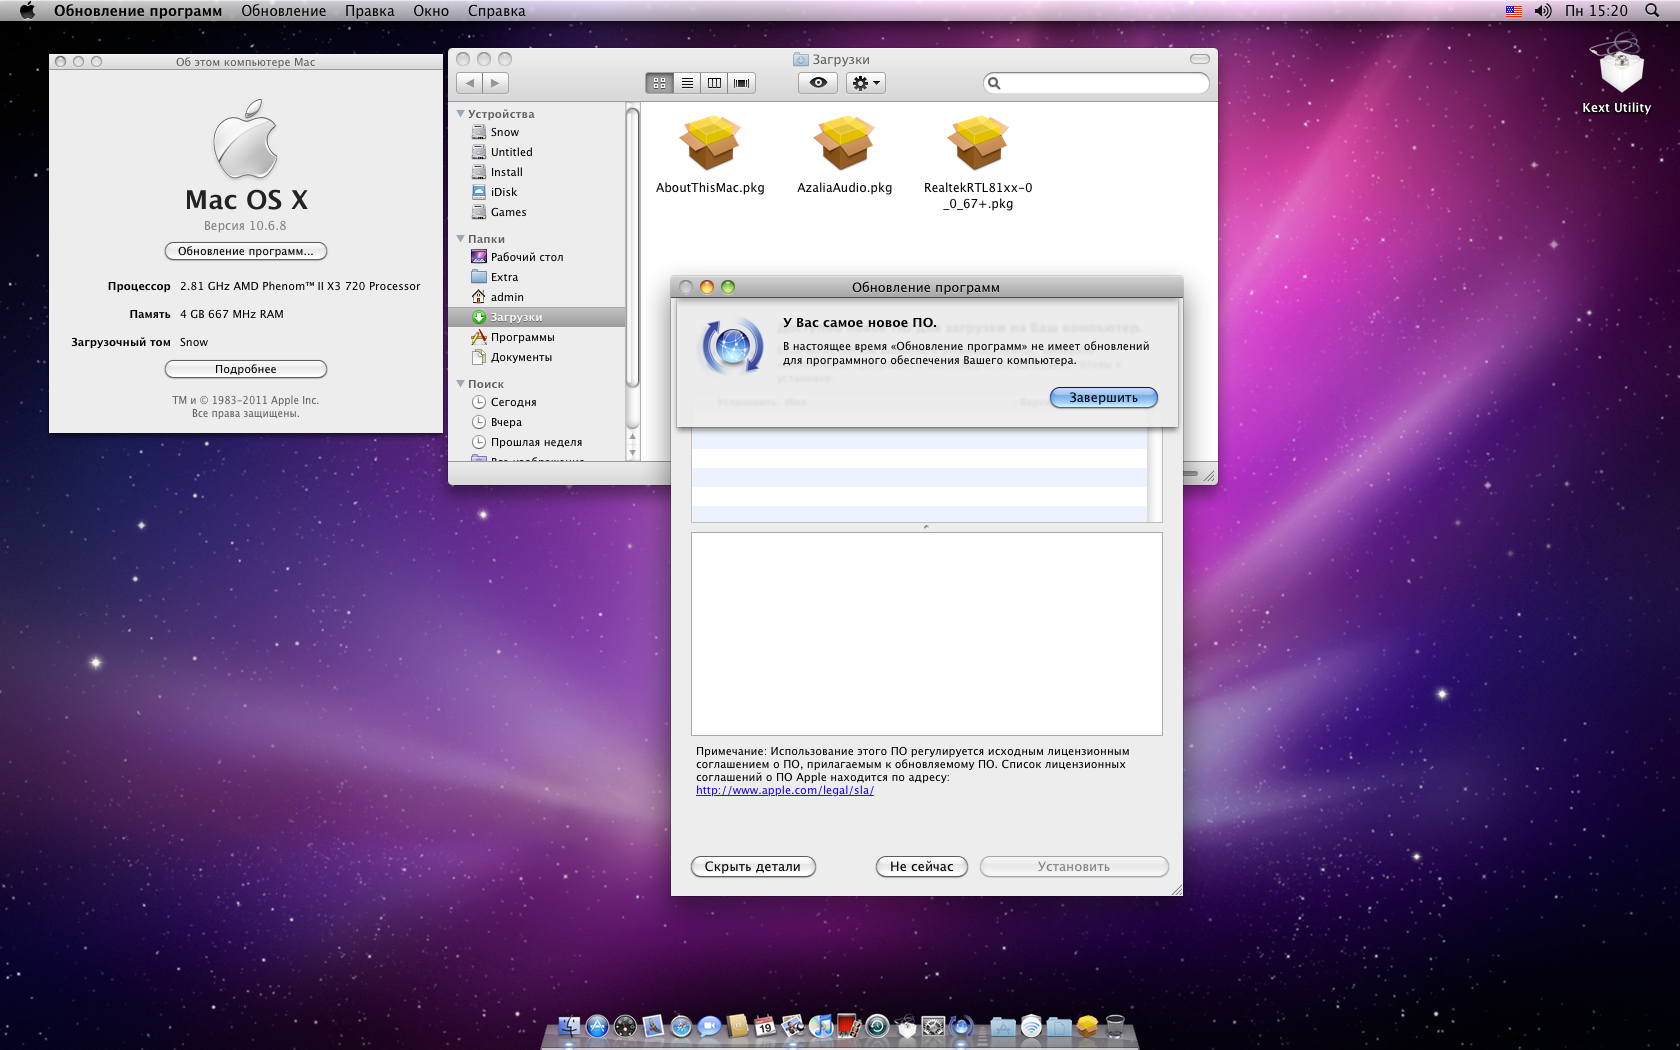 Mac OS X Snow Leopard - 10.6.8 